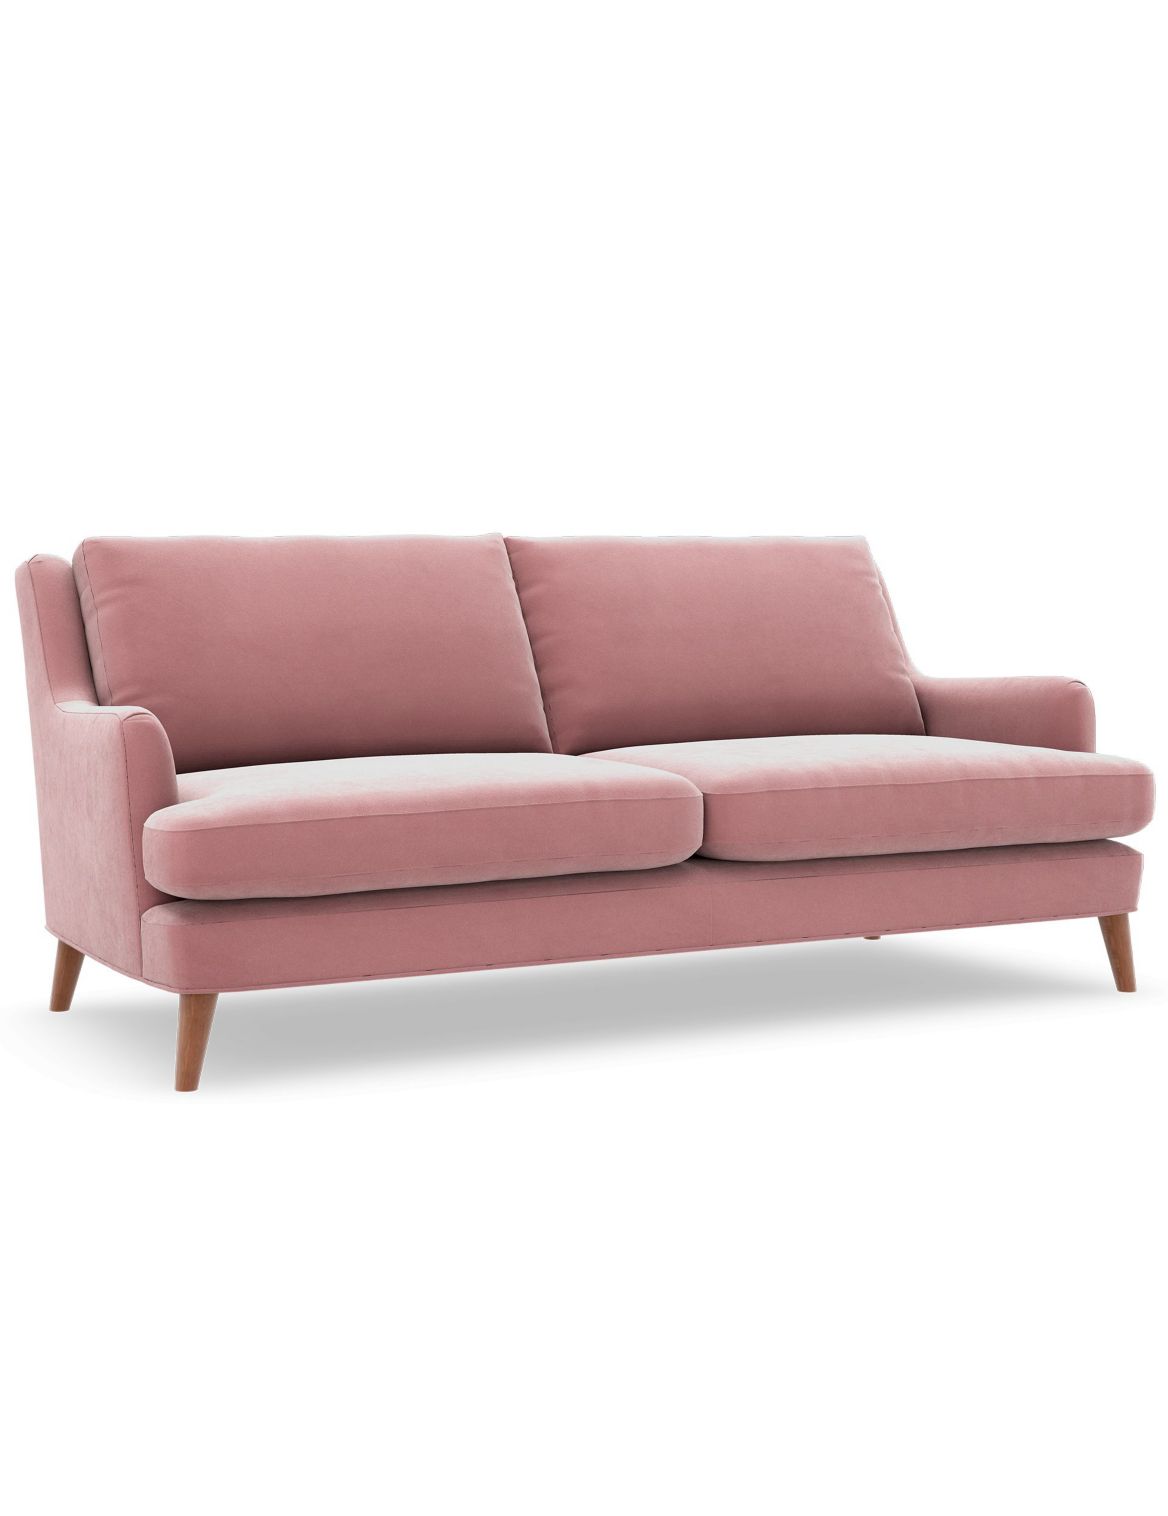 Ashton Large Sofa pink